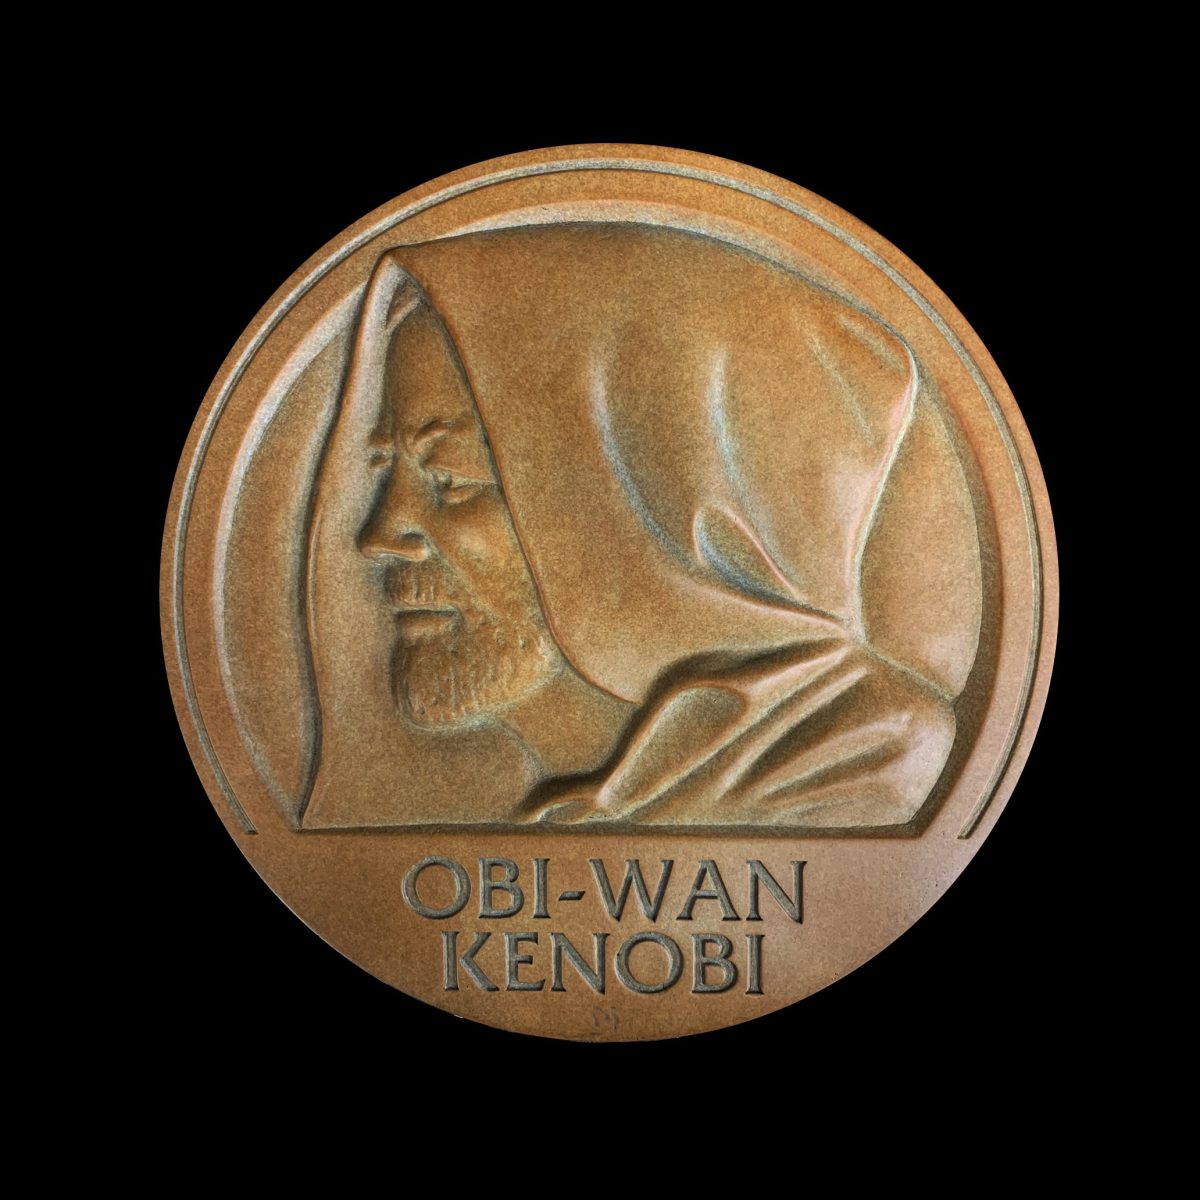 Obi Wan Kenobi Medal
by Lawrence Noble
